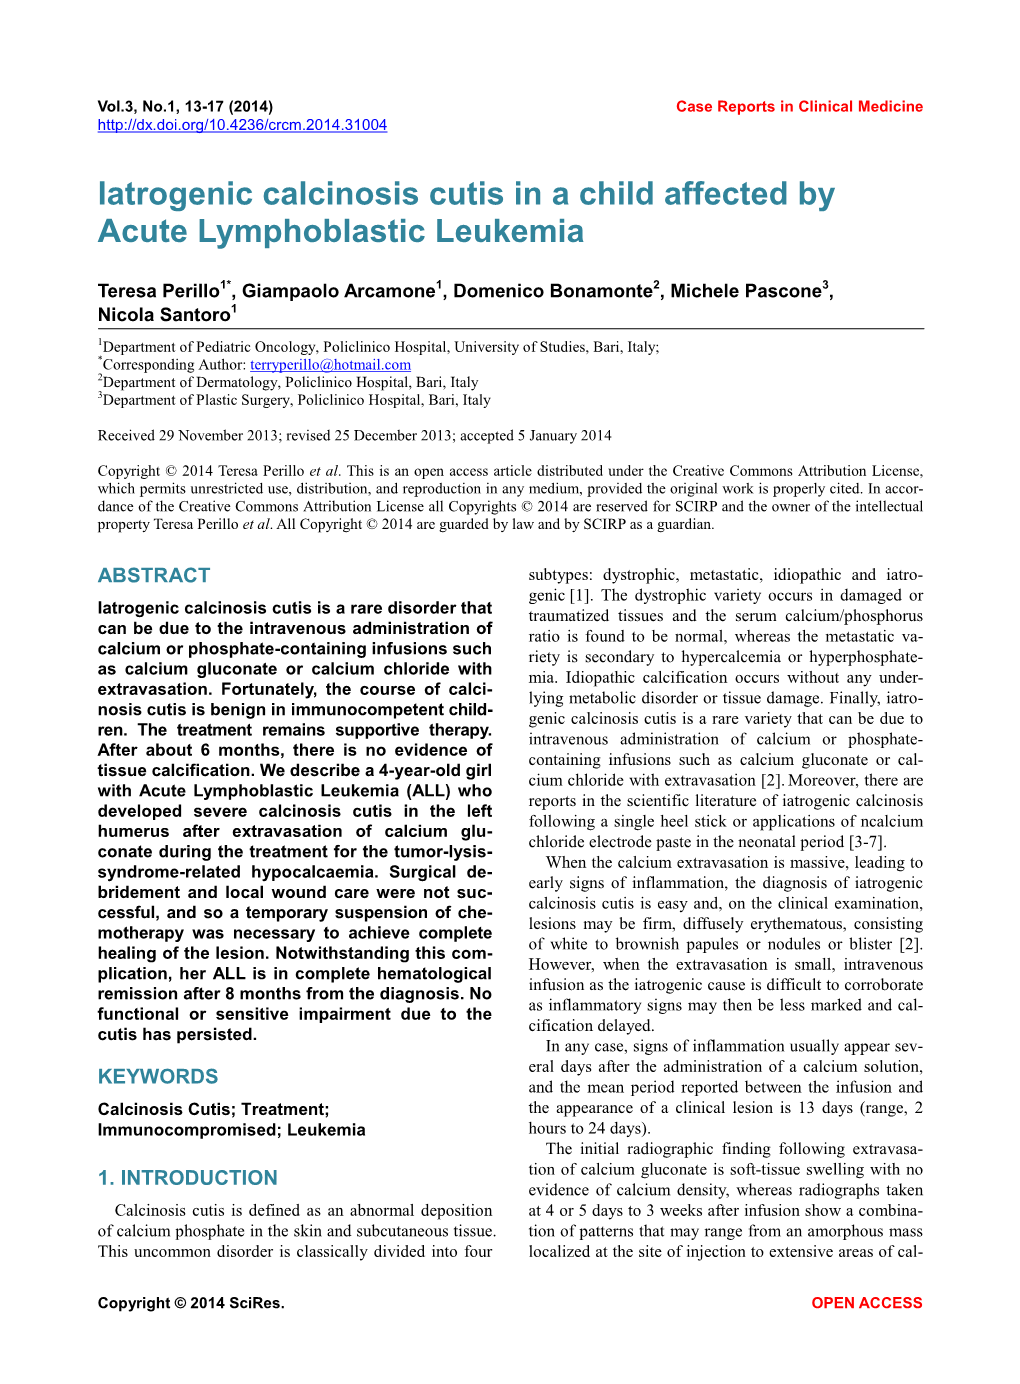 Iatrogenic Calcinosis Cutis in a Child Affected by Acute Lymphoblastic Leukemia